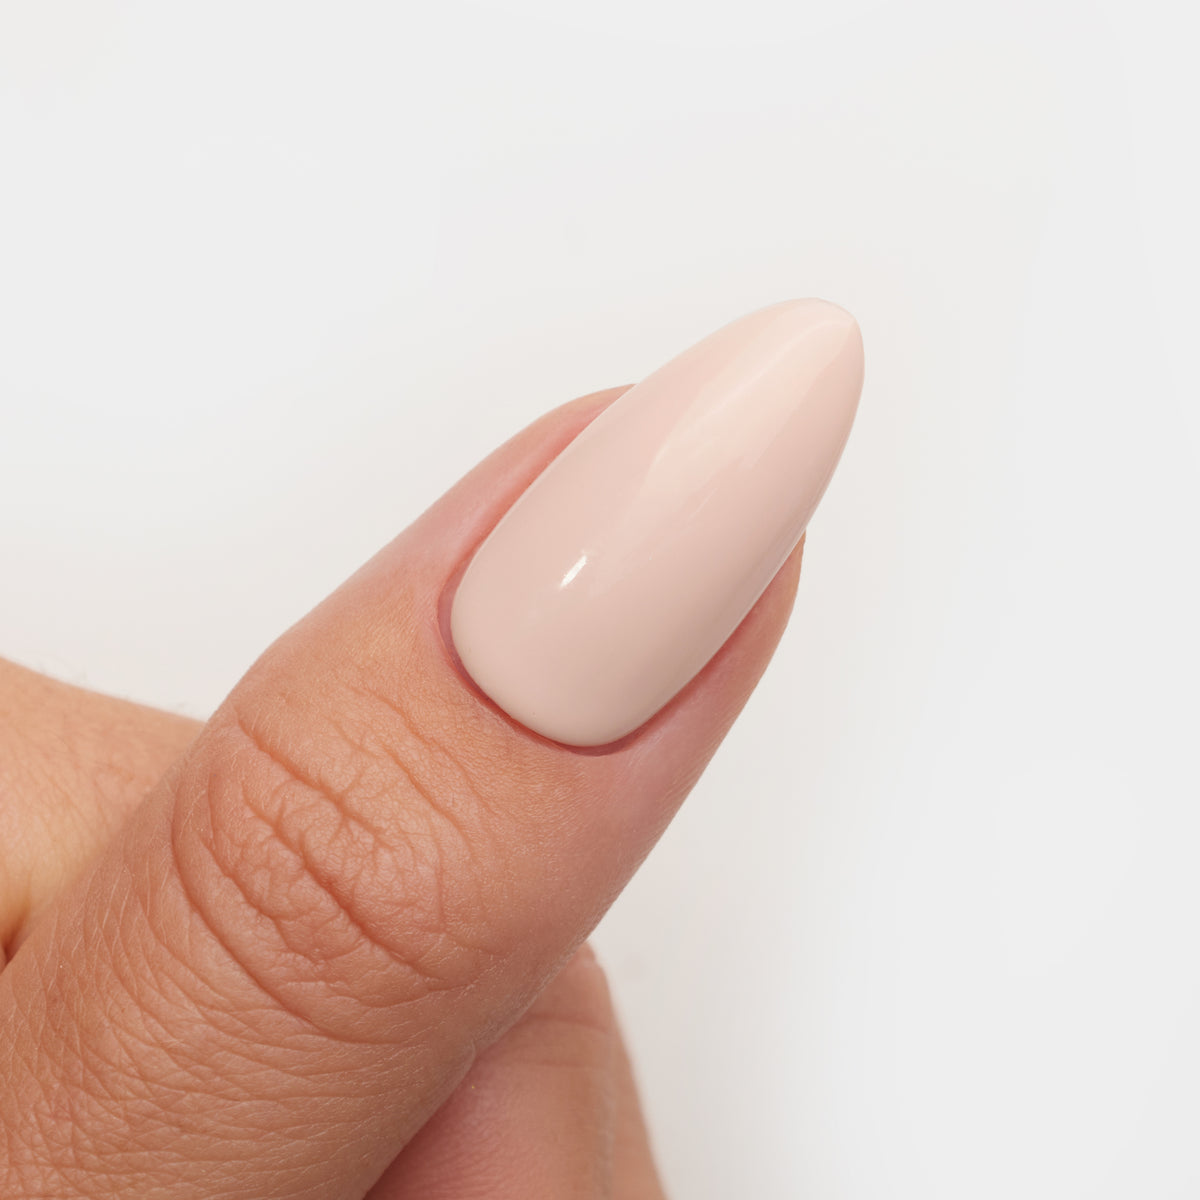 Gelous Seashell gel nail polish swatch - photographed in Australia